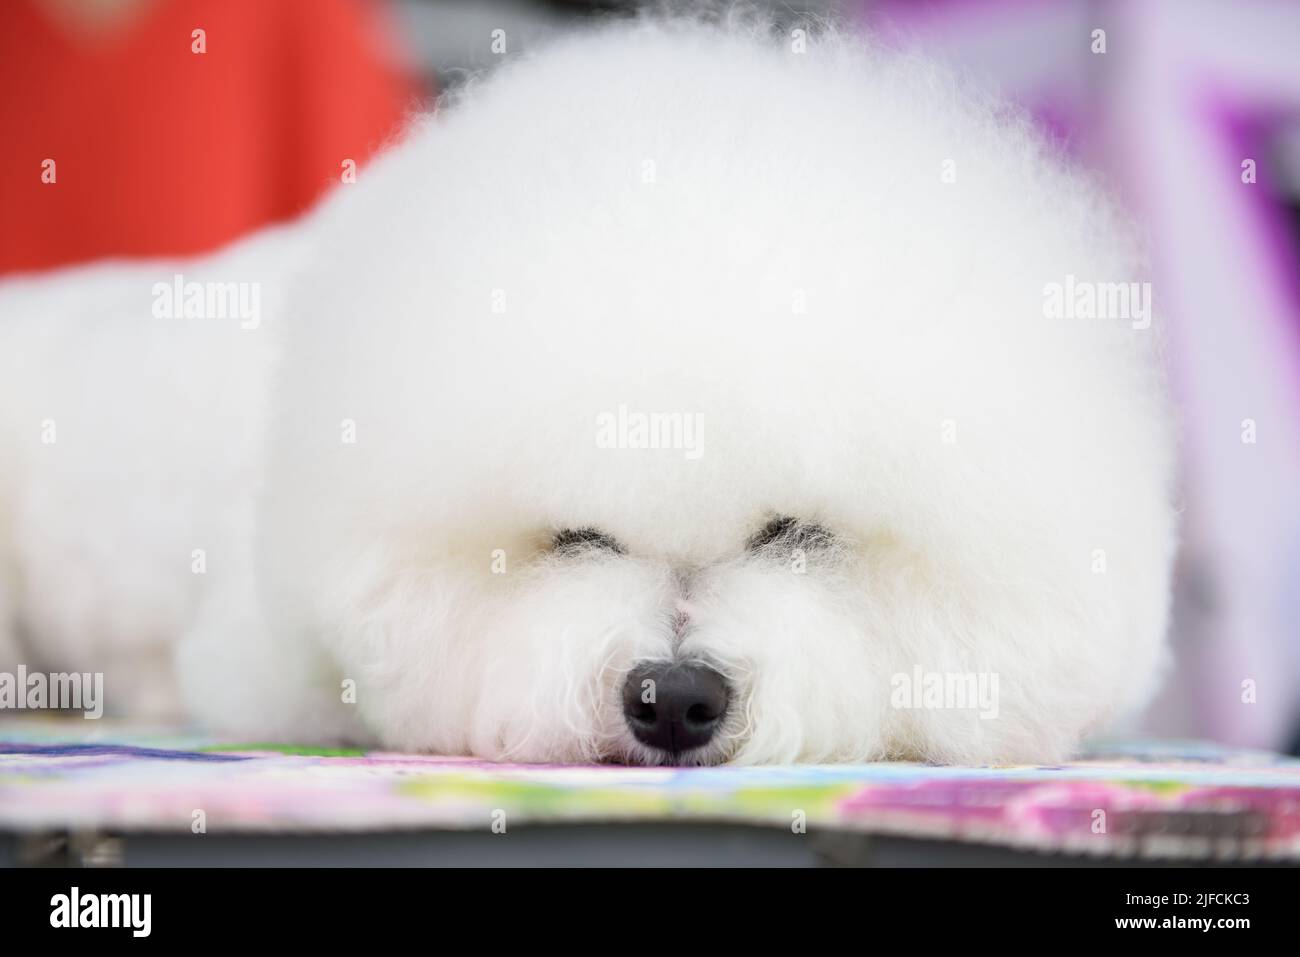 A Bichon Frise dog sleeps on a colored litter. Portrait. Close-up. Stock Photo